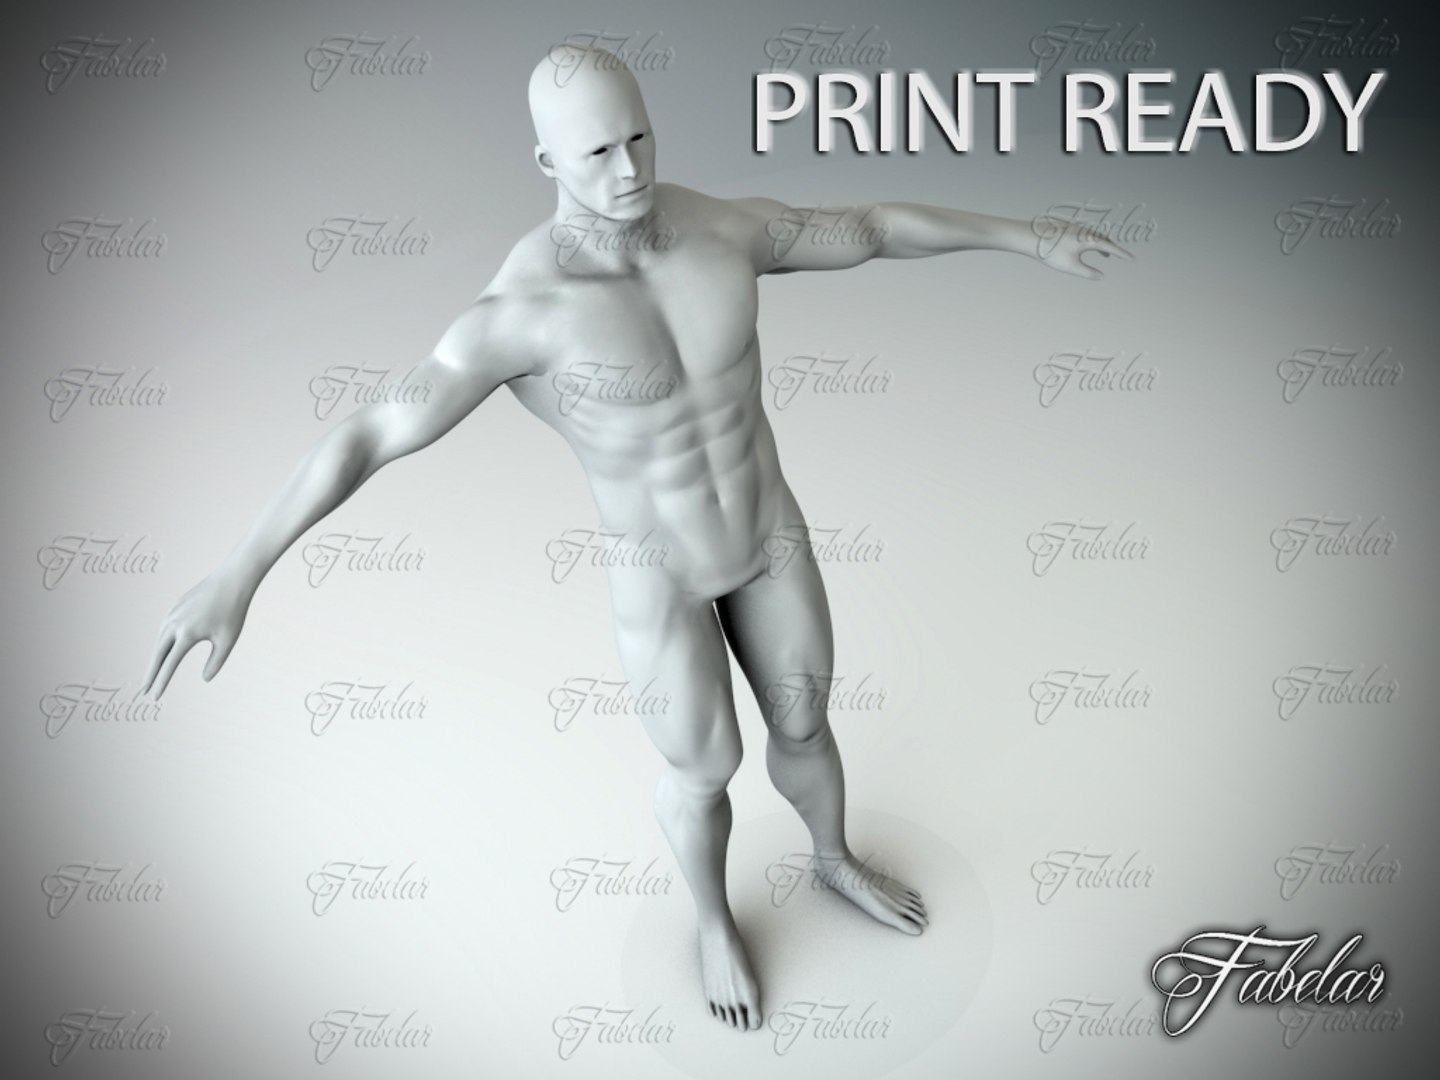 3d male human body model https://p.turbosquid.com/ts-thumb/IM/uyrH35/bFRDV5n3/body_print/jpg/1409430814/1920x1080/fit_q87/055c674a4ed9859f5221769e0018cf03ce3c9869/body_print.jpg